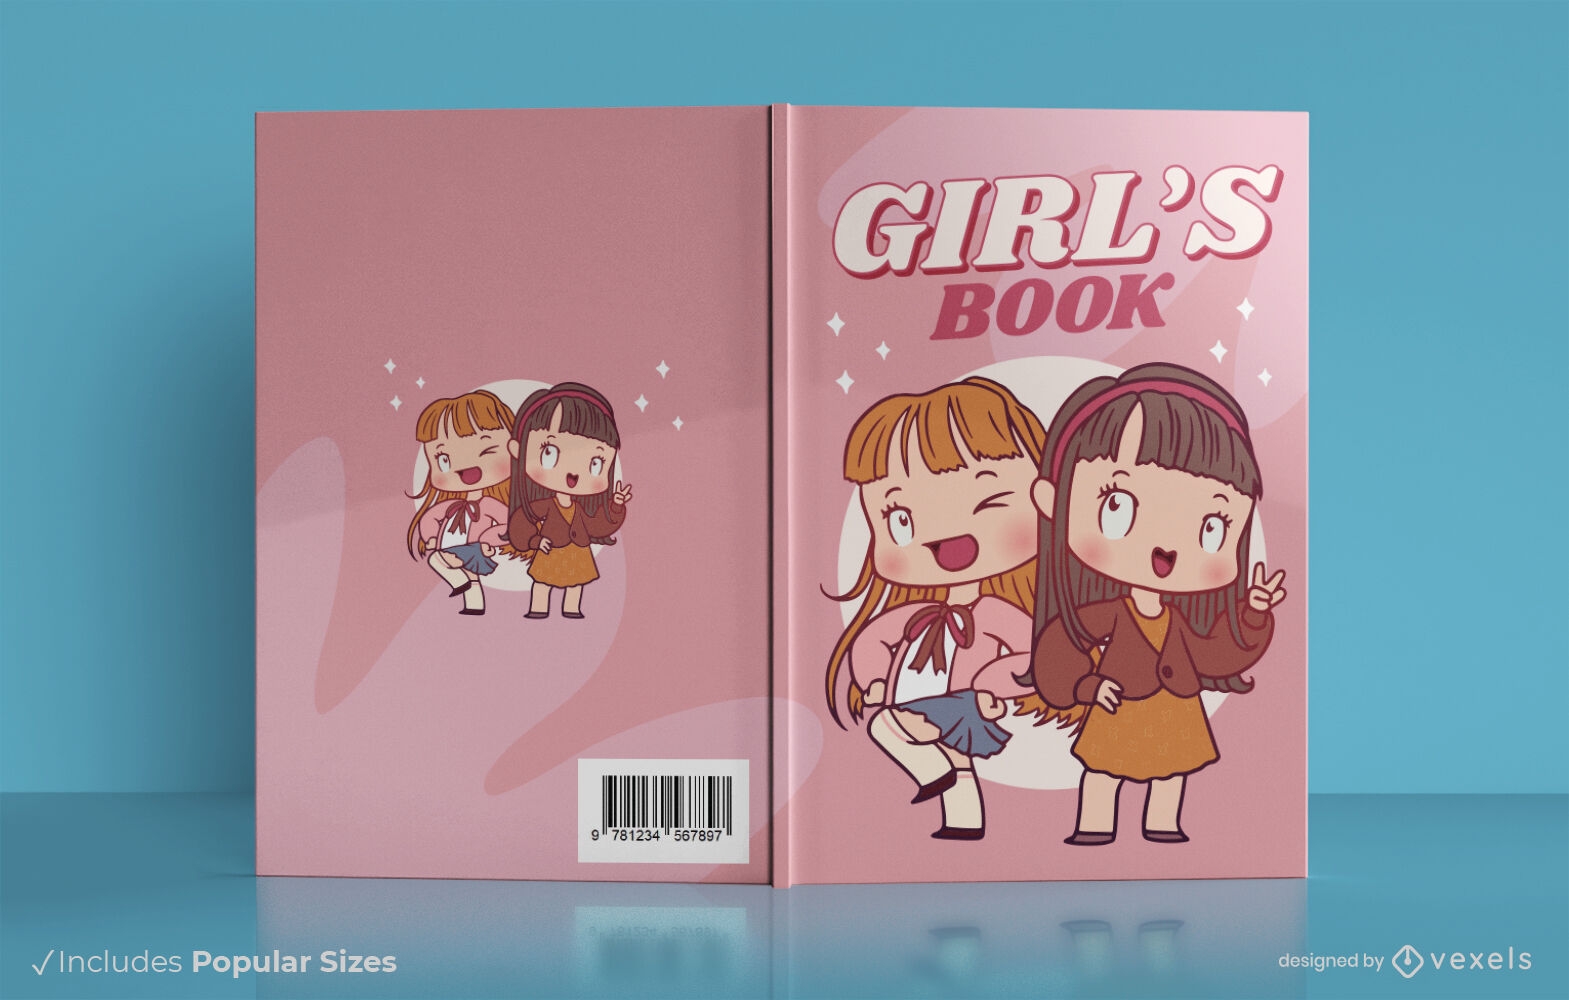 Girls friendship book cover design